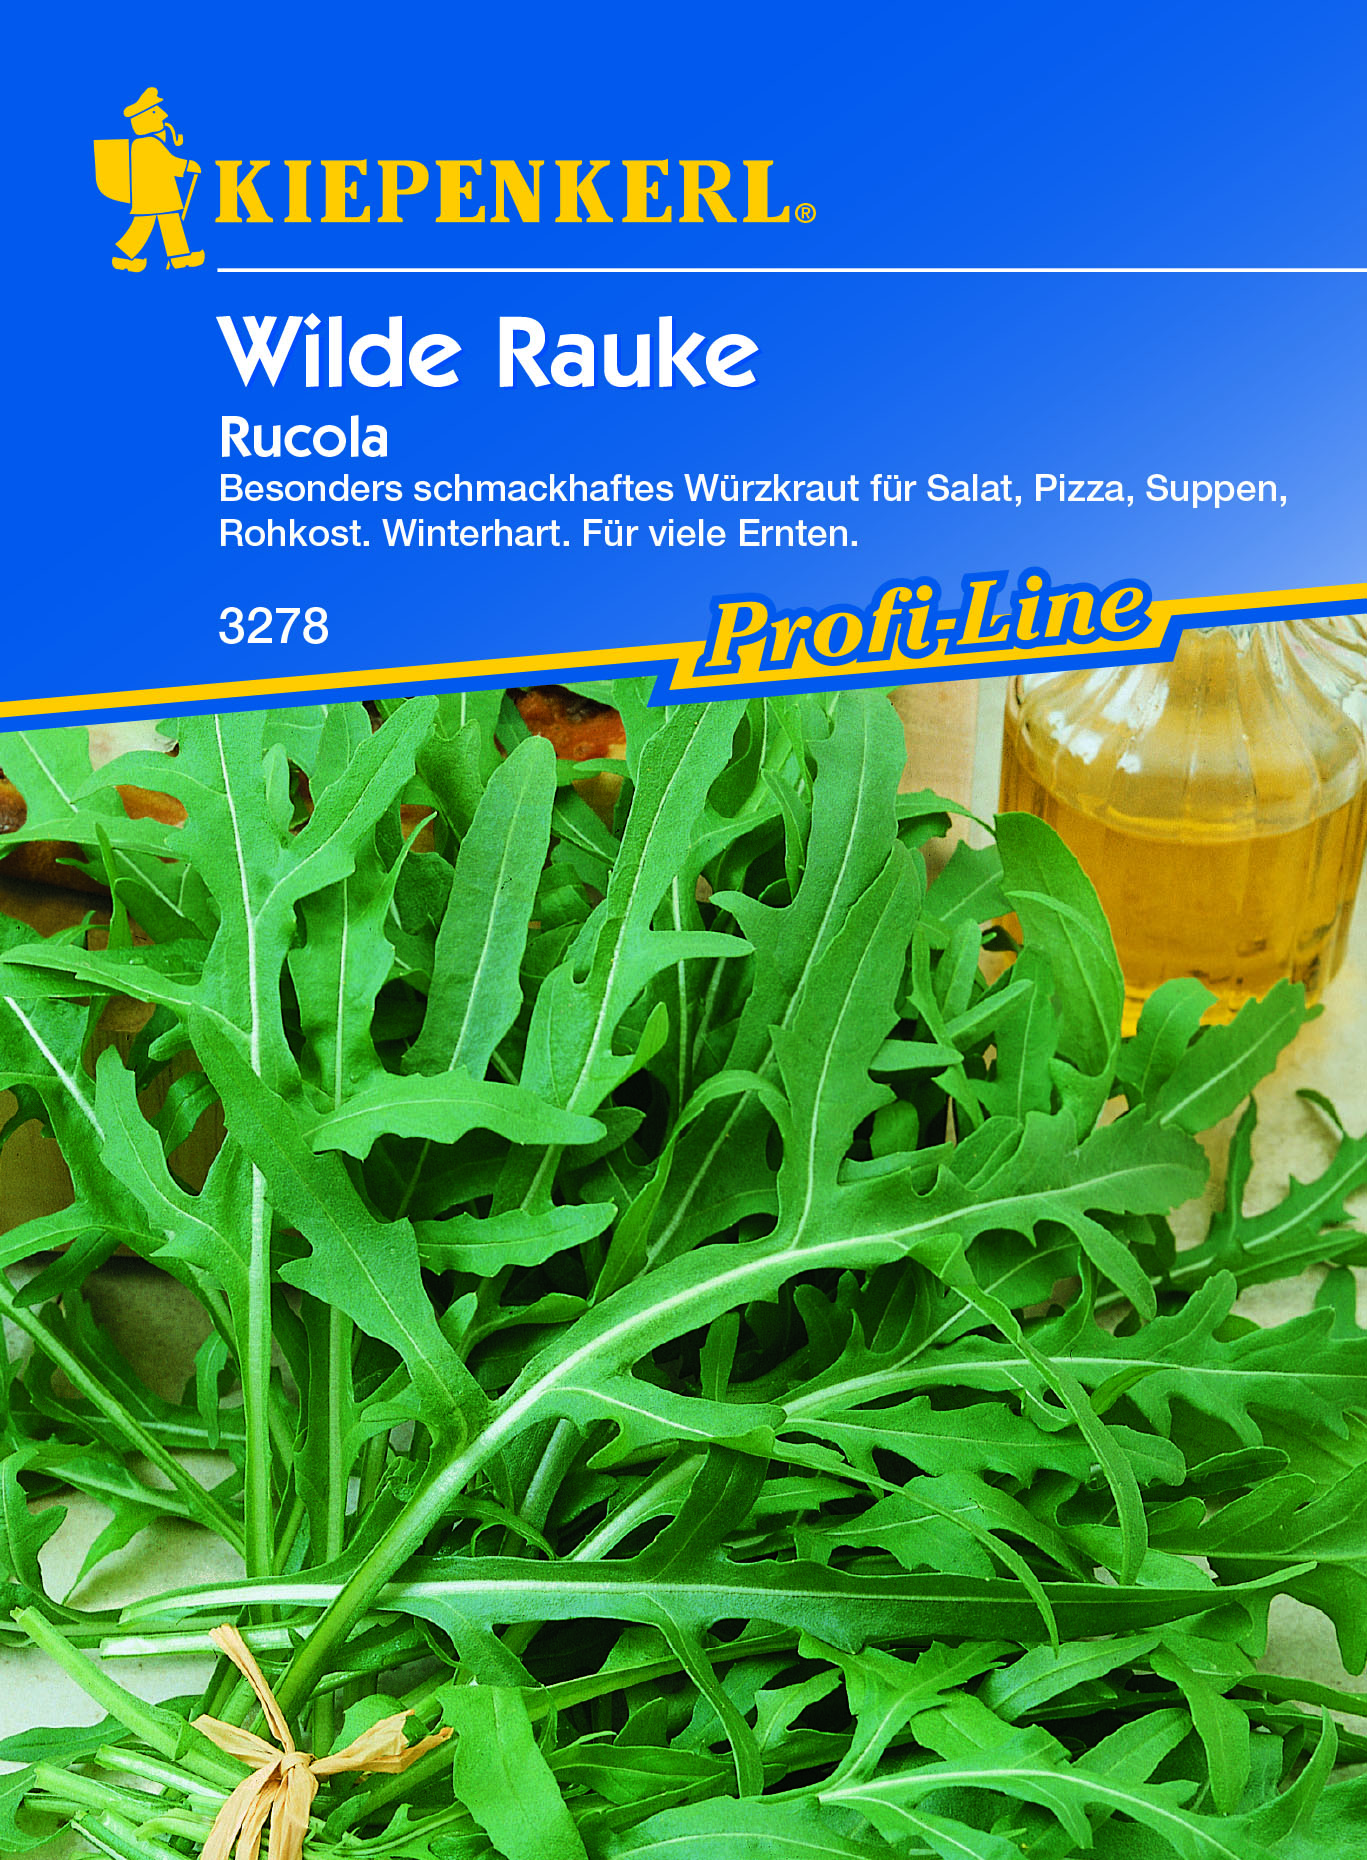 Kiepenkerl® Profi-Line Rucola Wilde Rauke